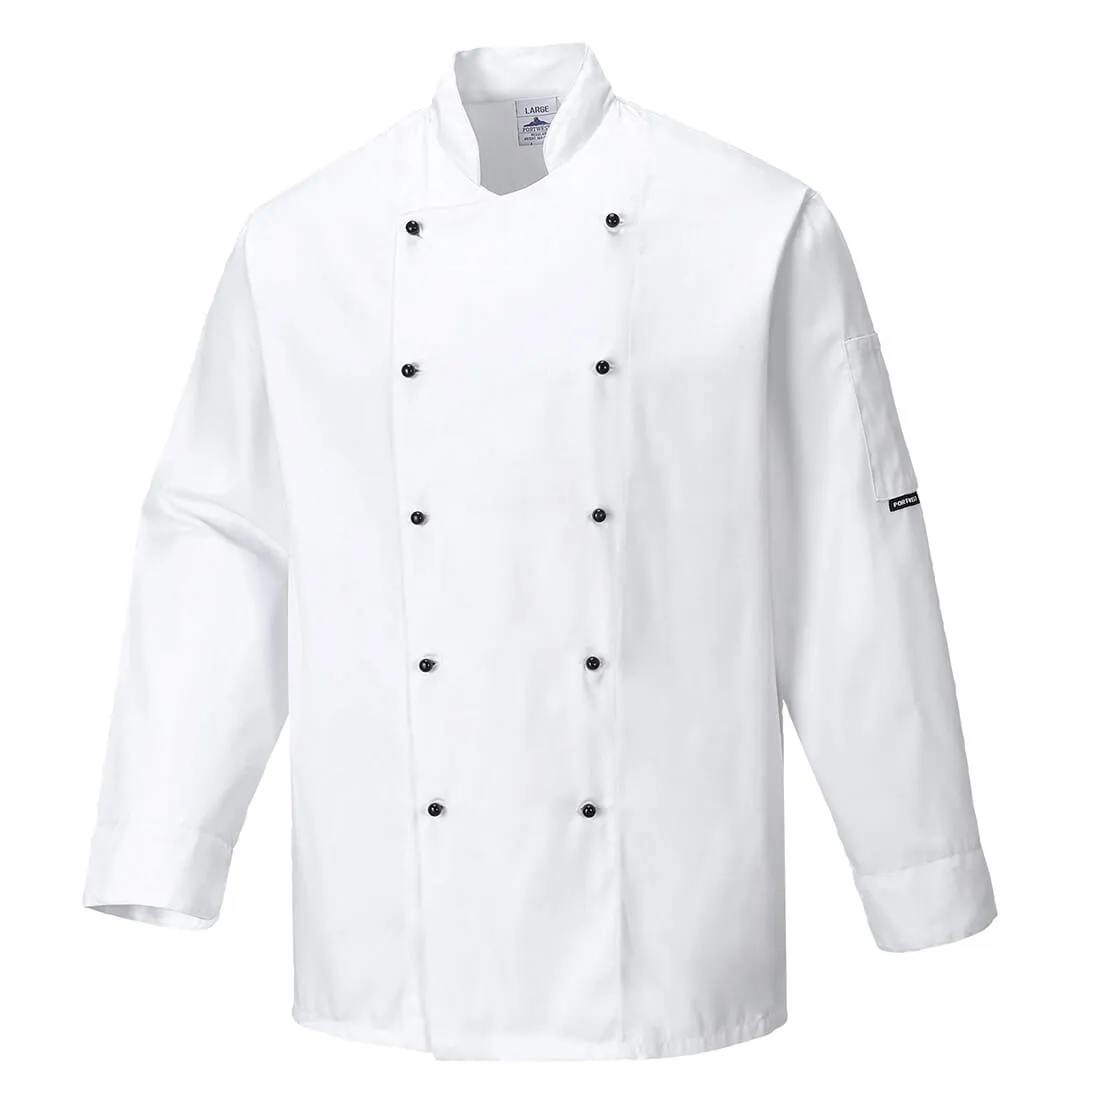 Portwest Unisex Somerset Chefs Jacket - White, M